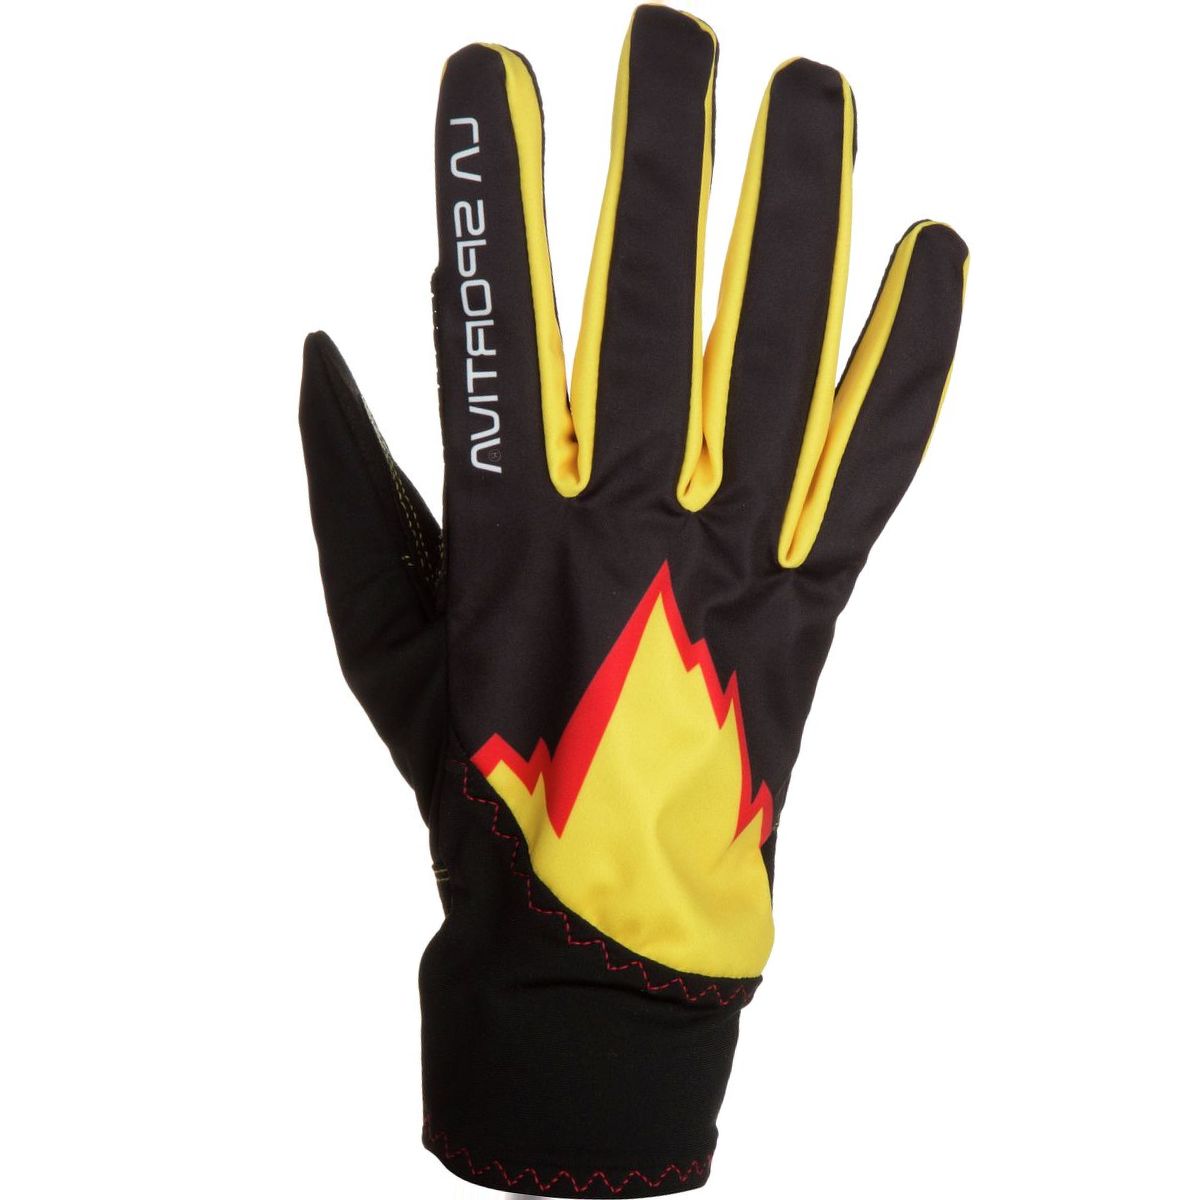 La Sportiva Syborg Glove - Men's